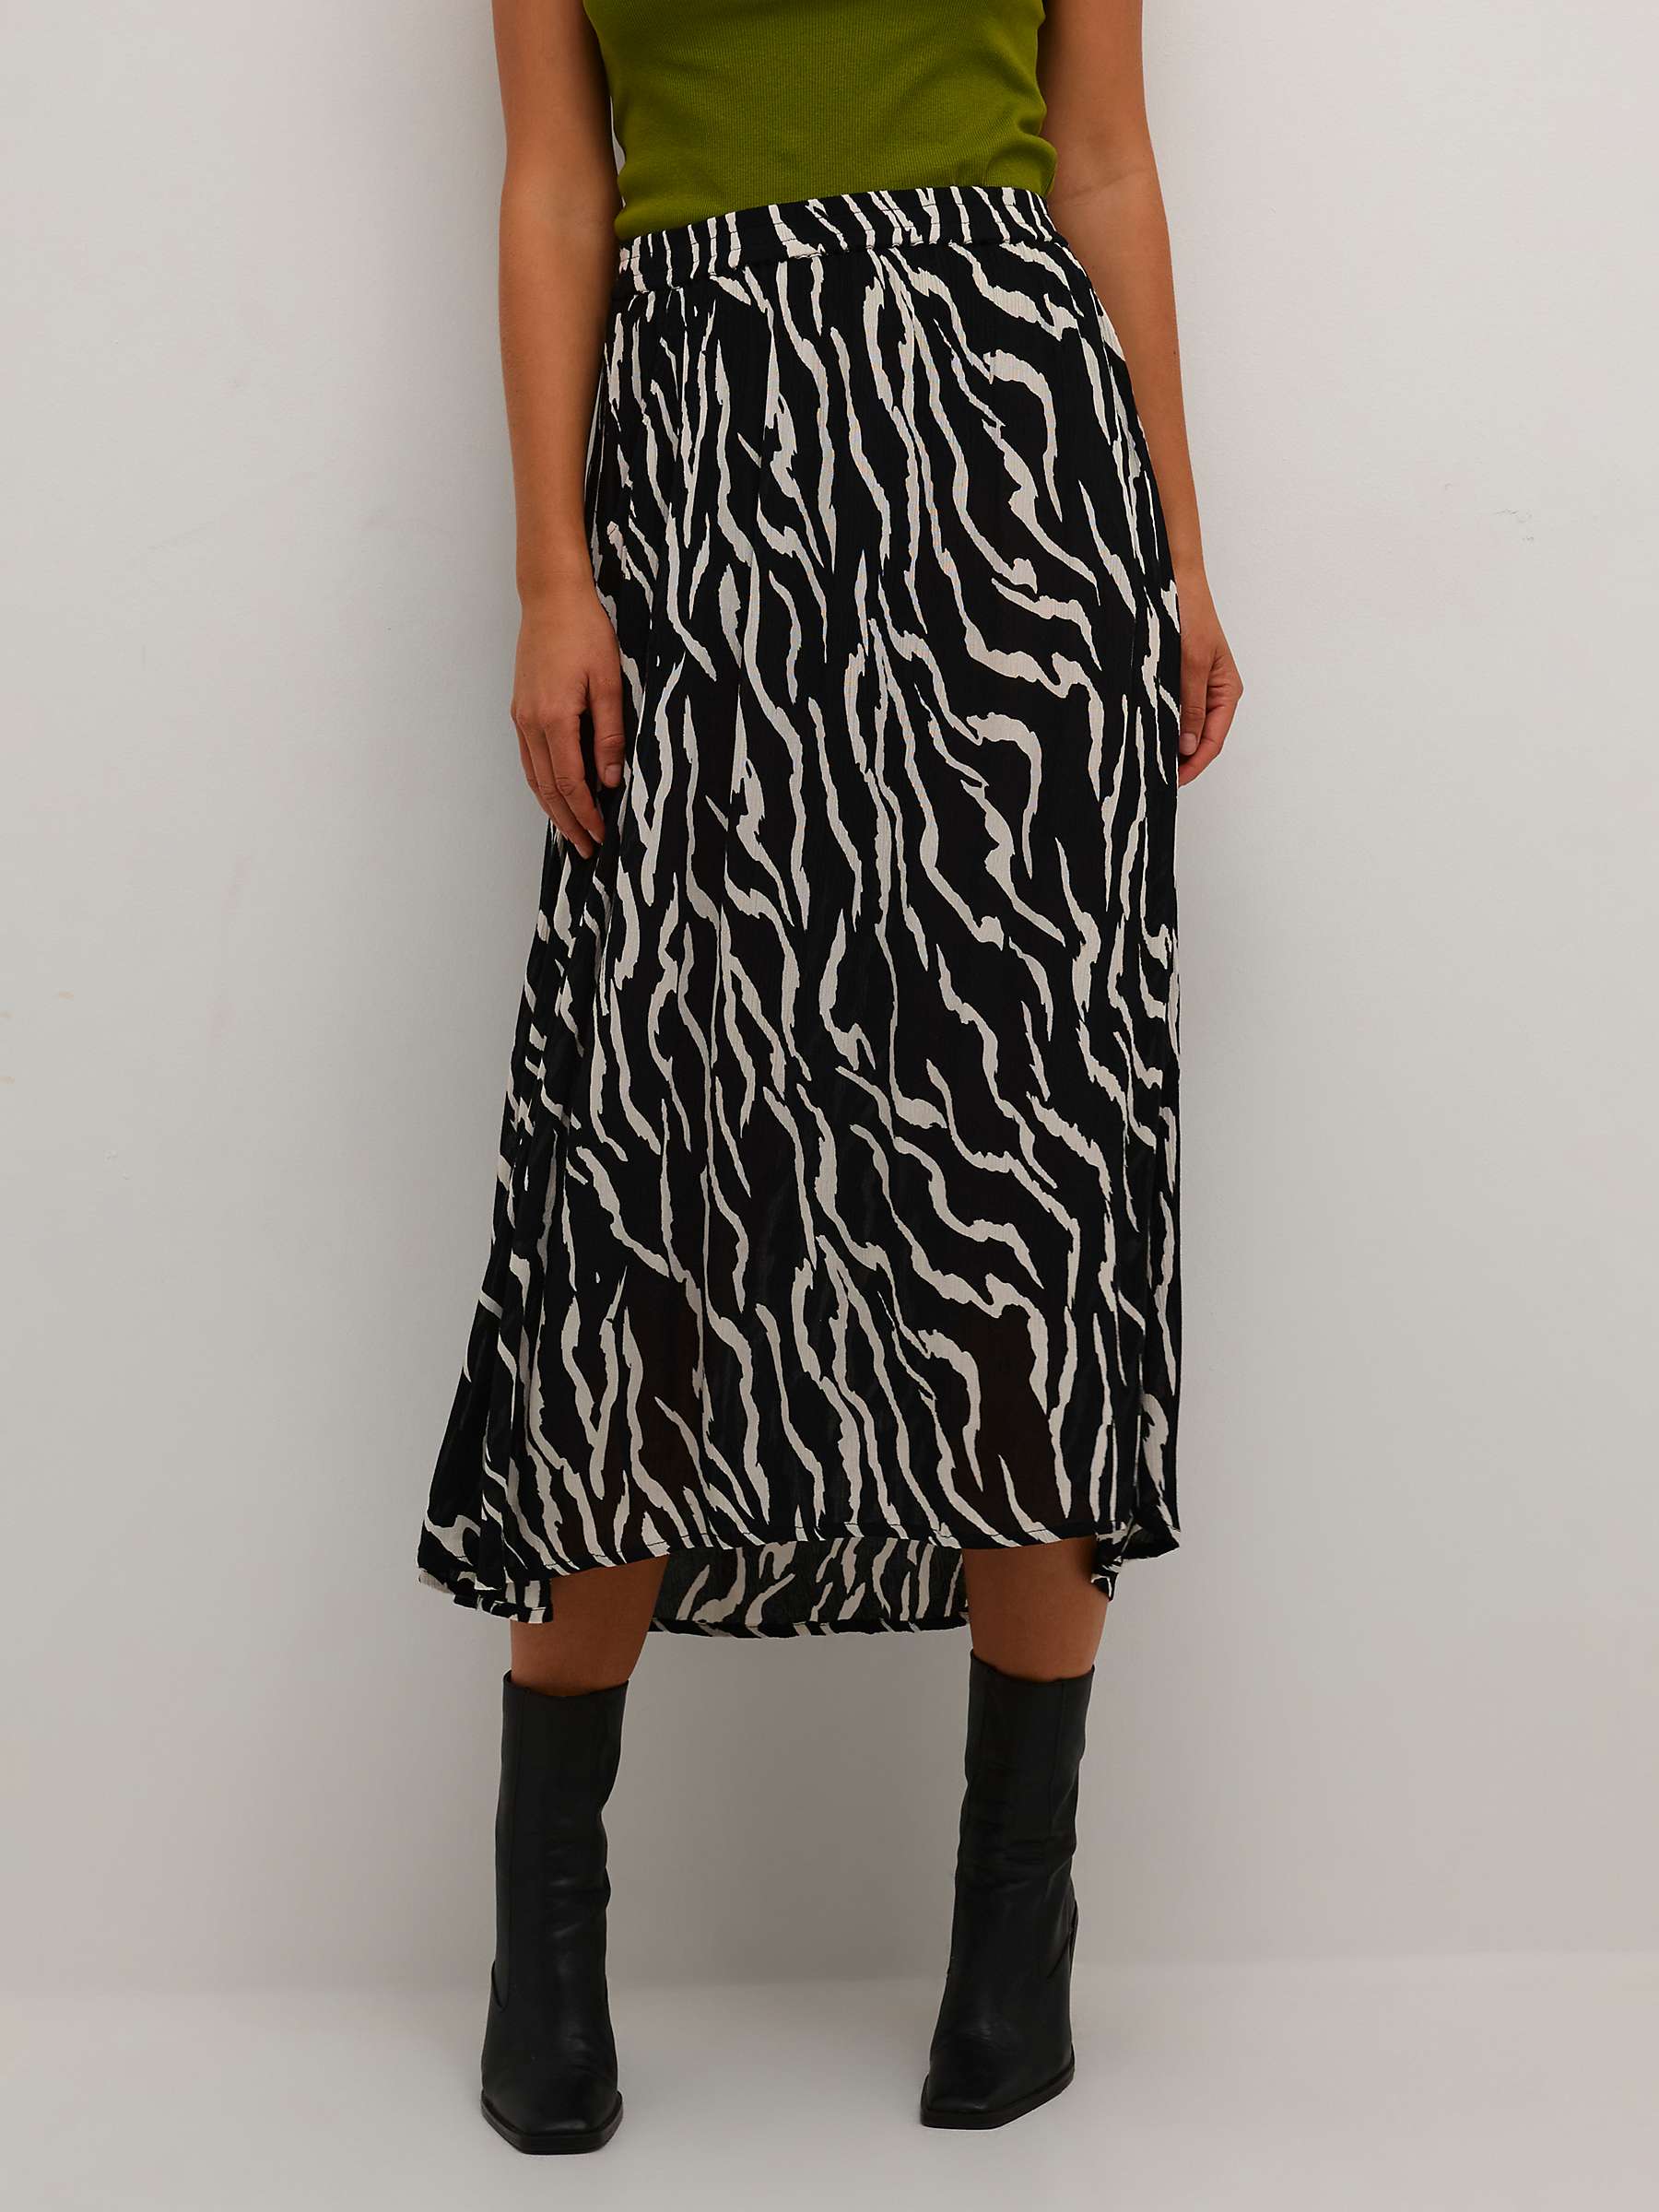 Buy KAFFE Amber High Waisted Midi Skirt, Black/Antique Online at johnlewis.com